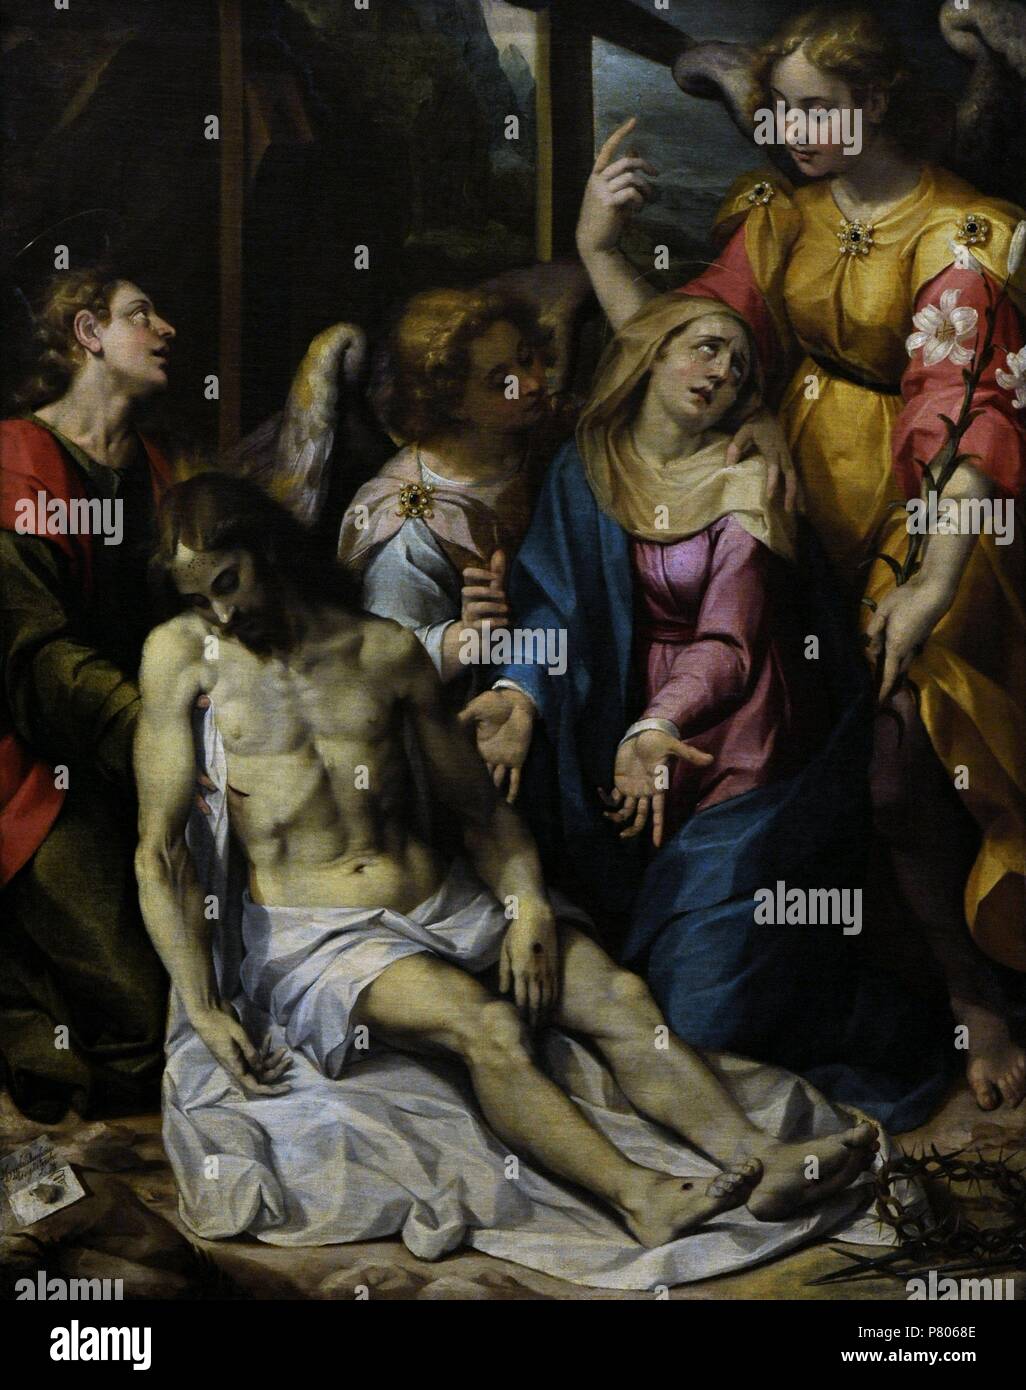 Ippolito Borguese (1568-1627). Italienischer Maler der Spätrenaissance. Pieta, 1603. Öl auf Leinwand. Nationales Museum von Capodimonte. Neapel. Italien. Stockfoto